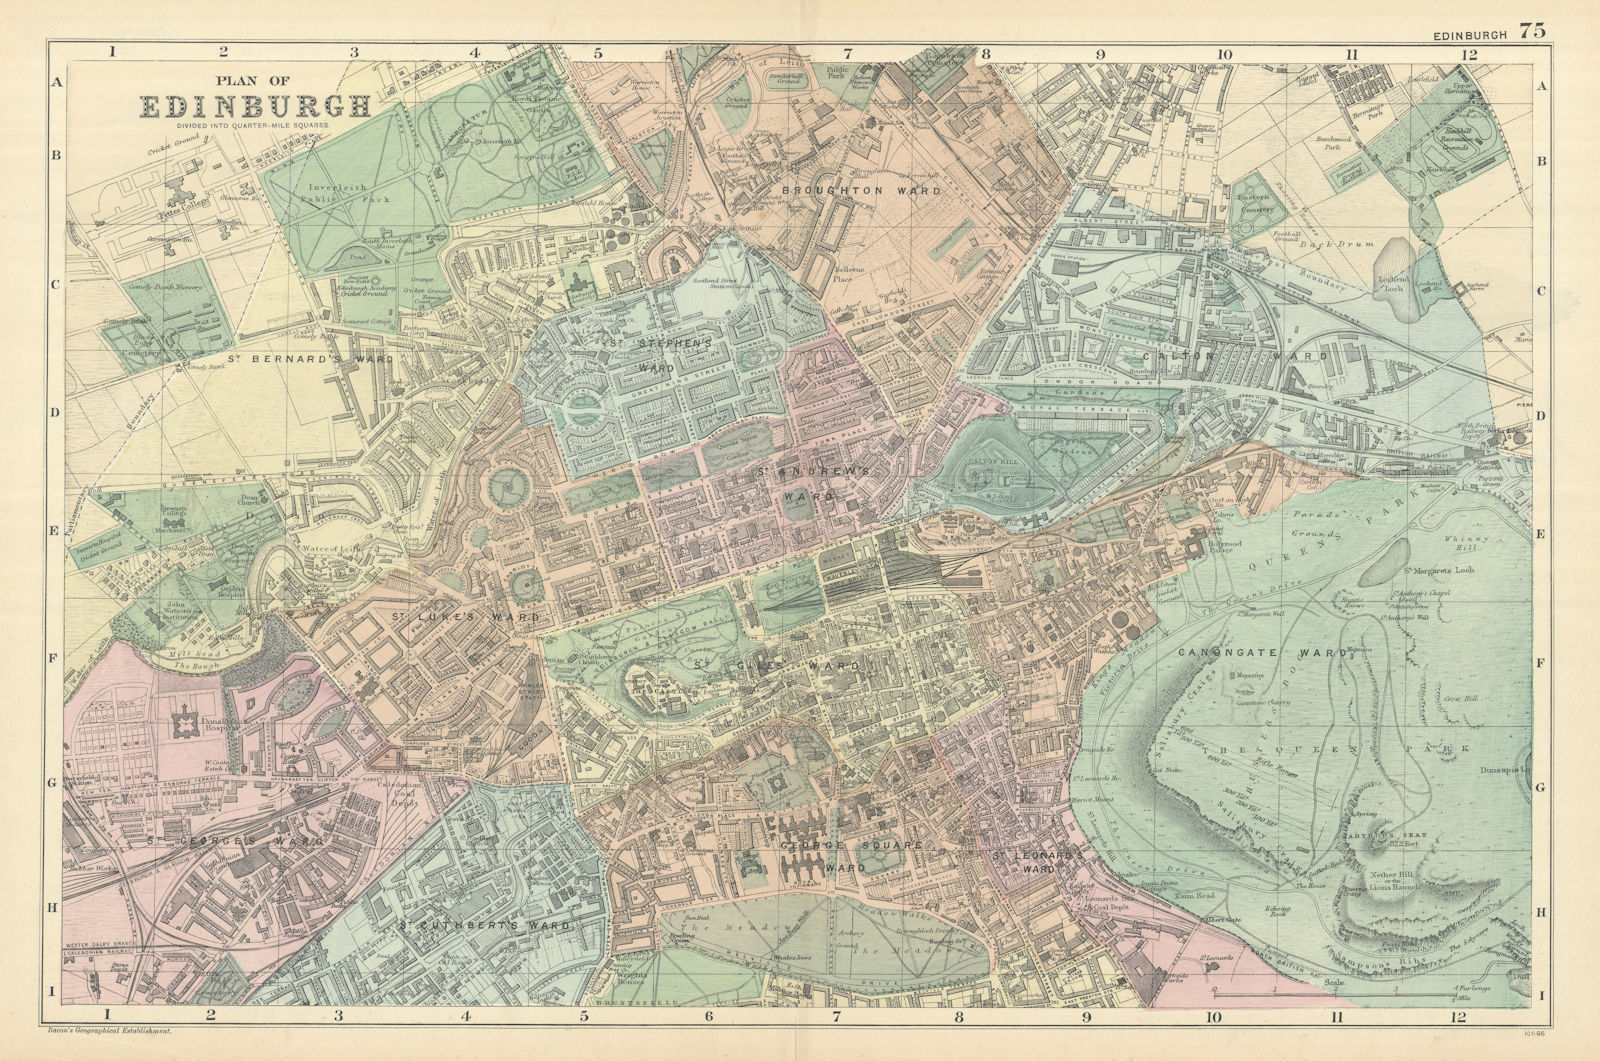 EDINBURGH antique town city plan by GW BACON 1898 old map chart